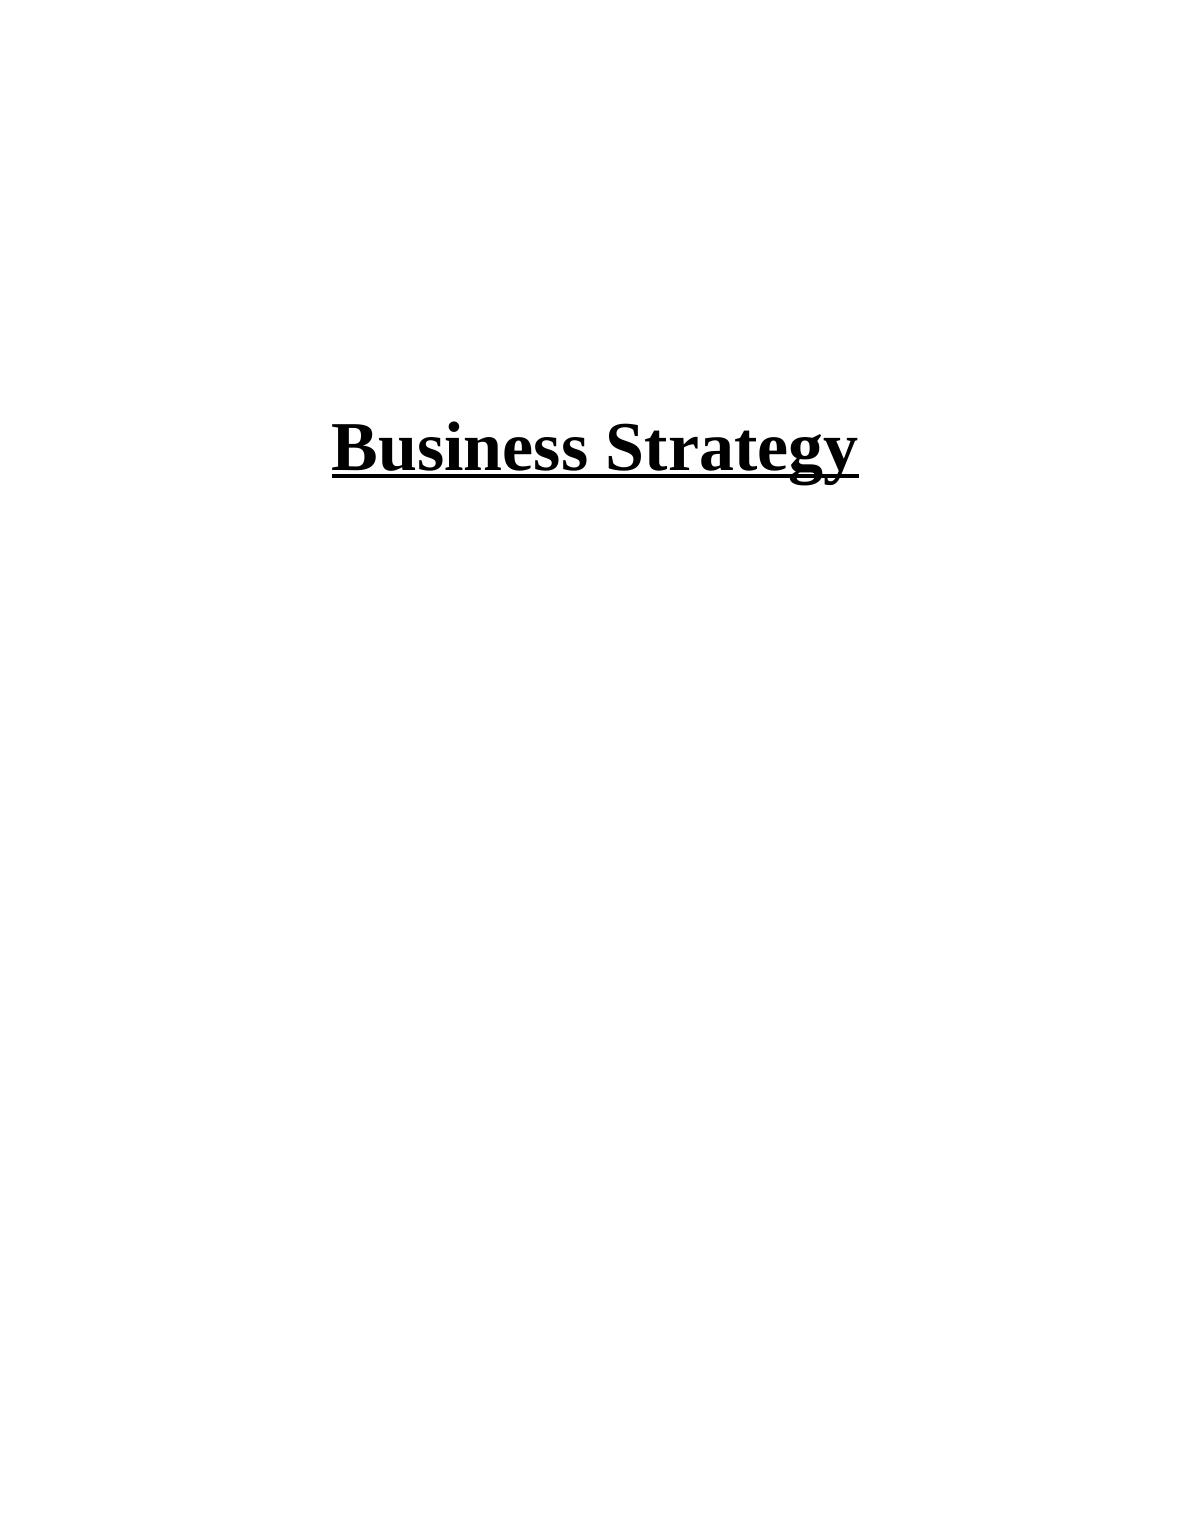 Business Strategy Assignment - Vodafone Telecom Company_1